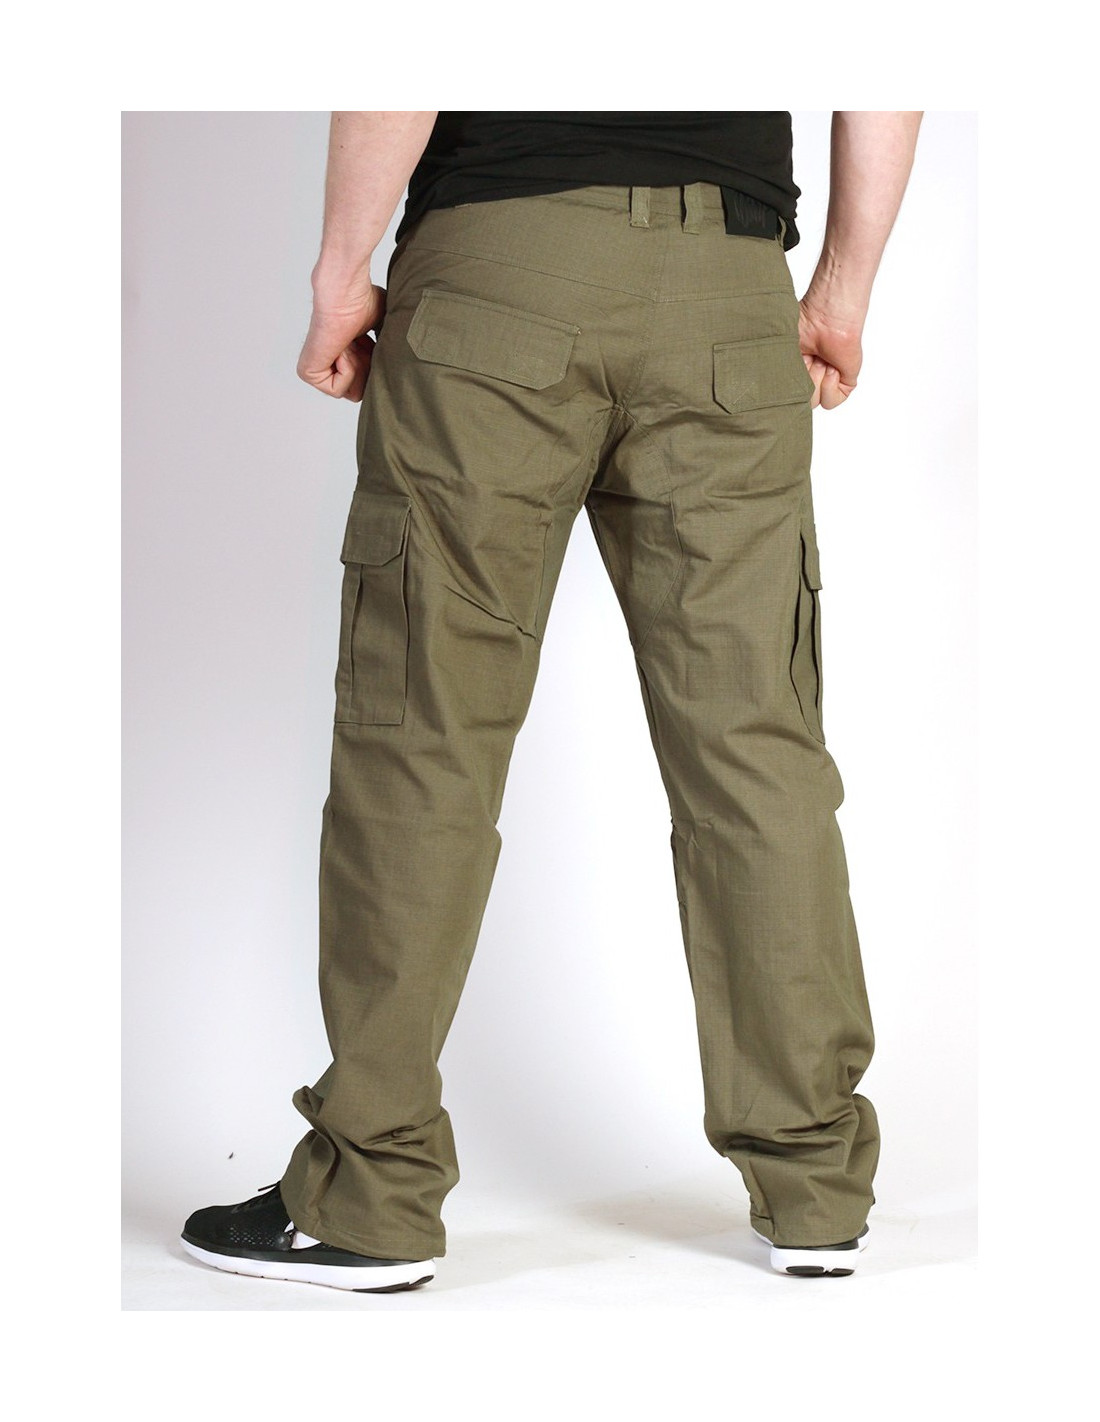 BSAT Regular Fit Combat Cargo Pants Light Green